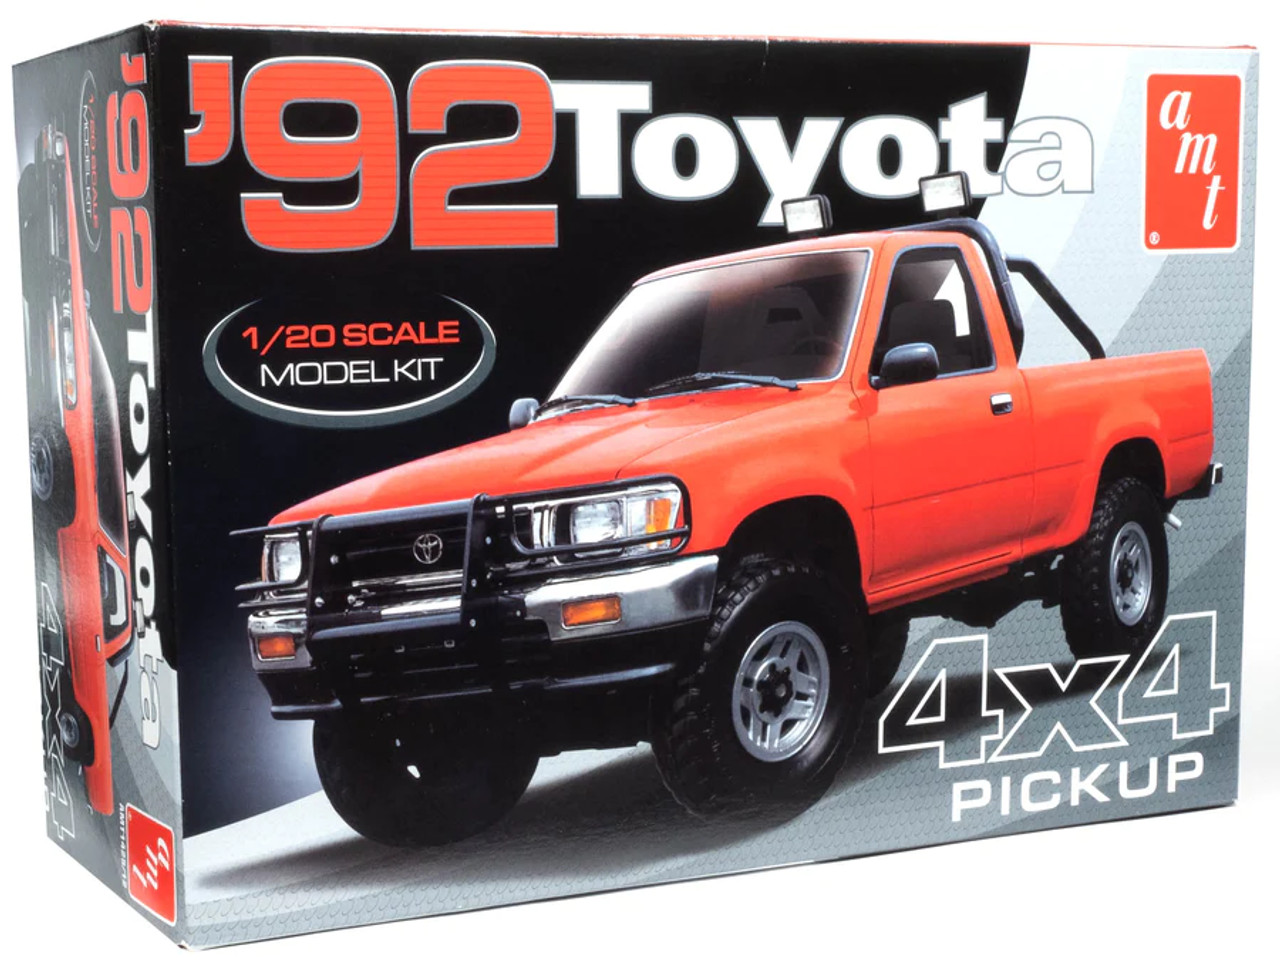 AMT 1992 Toyota 4x4 Pickup 1/20